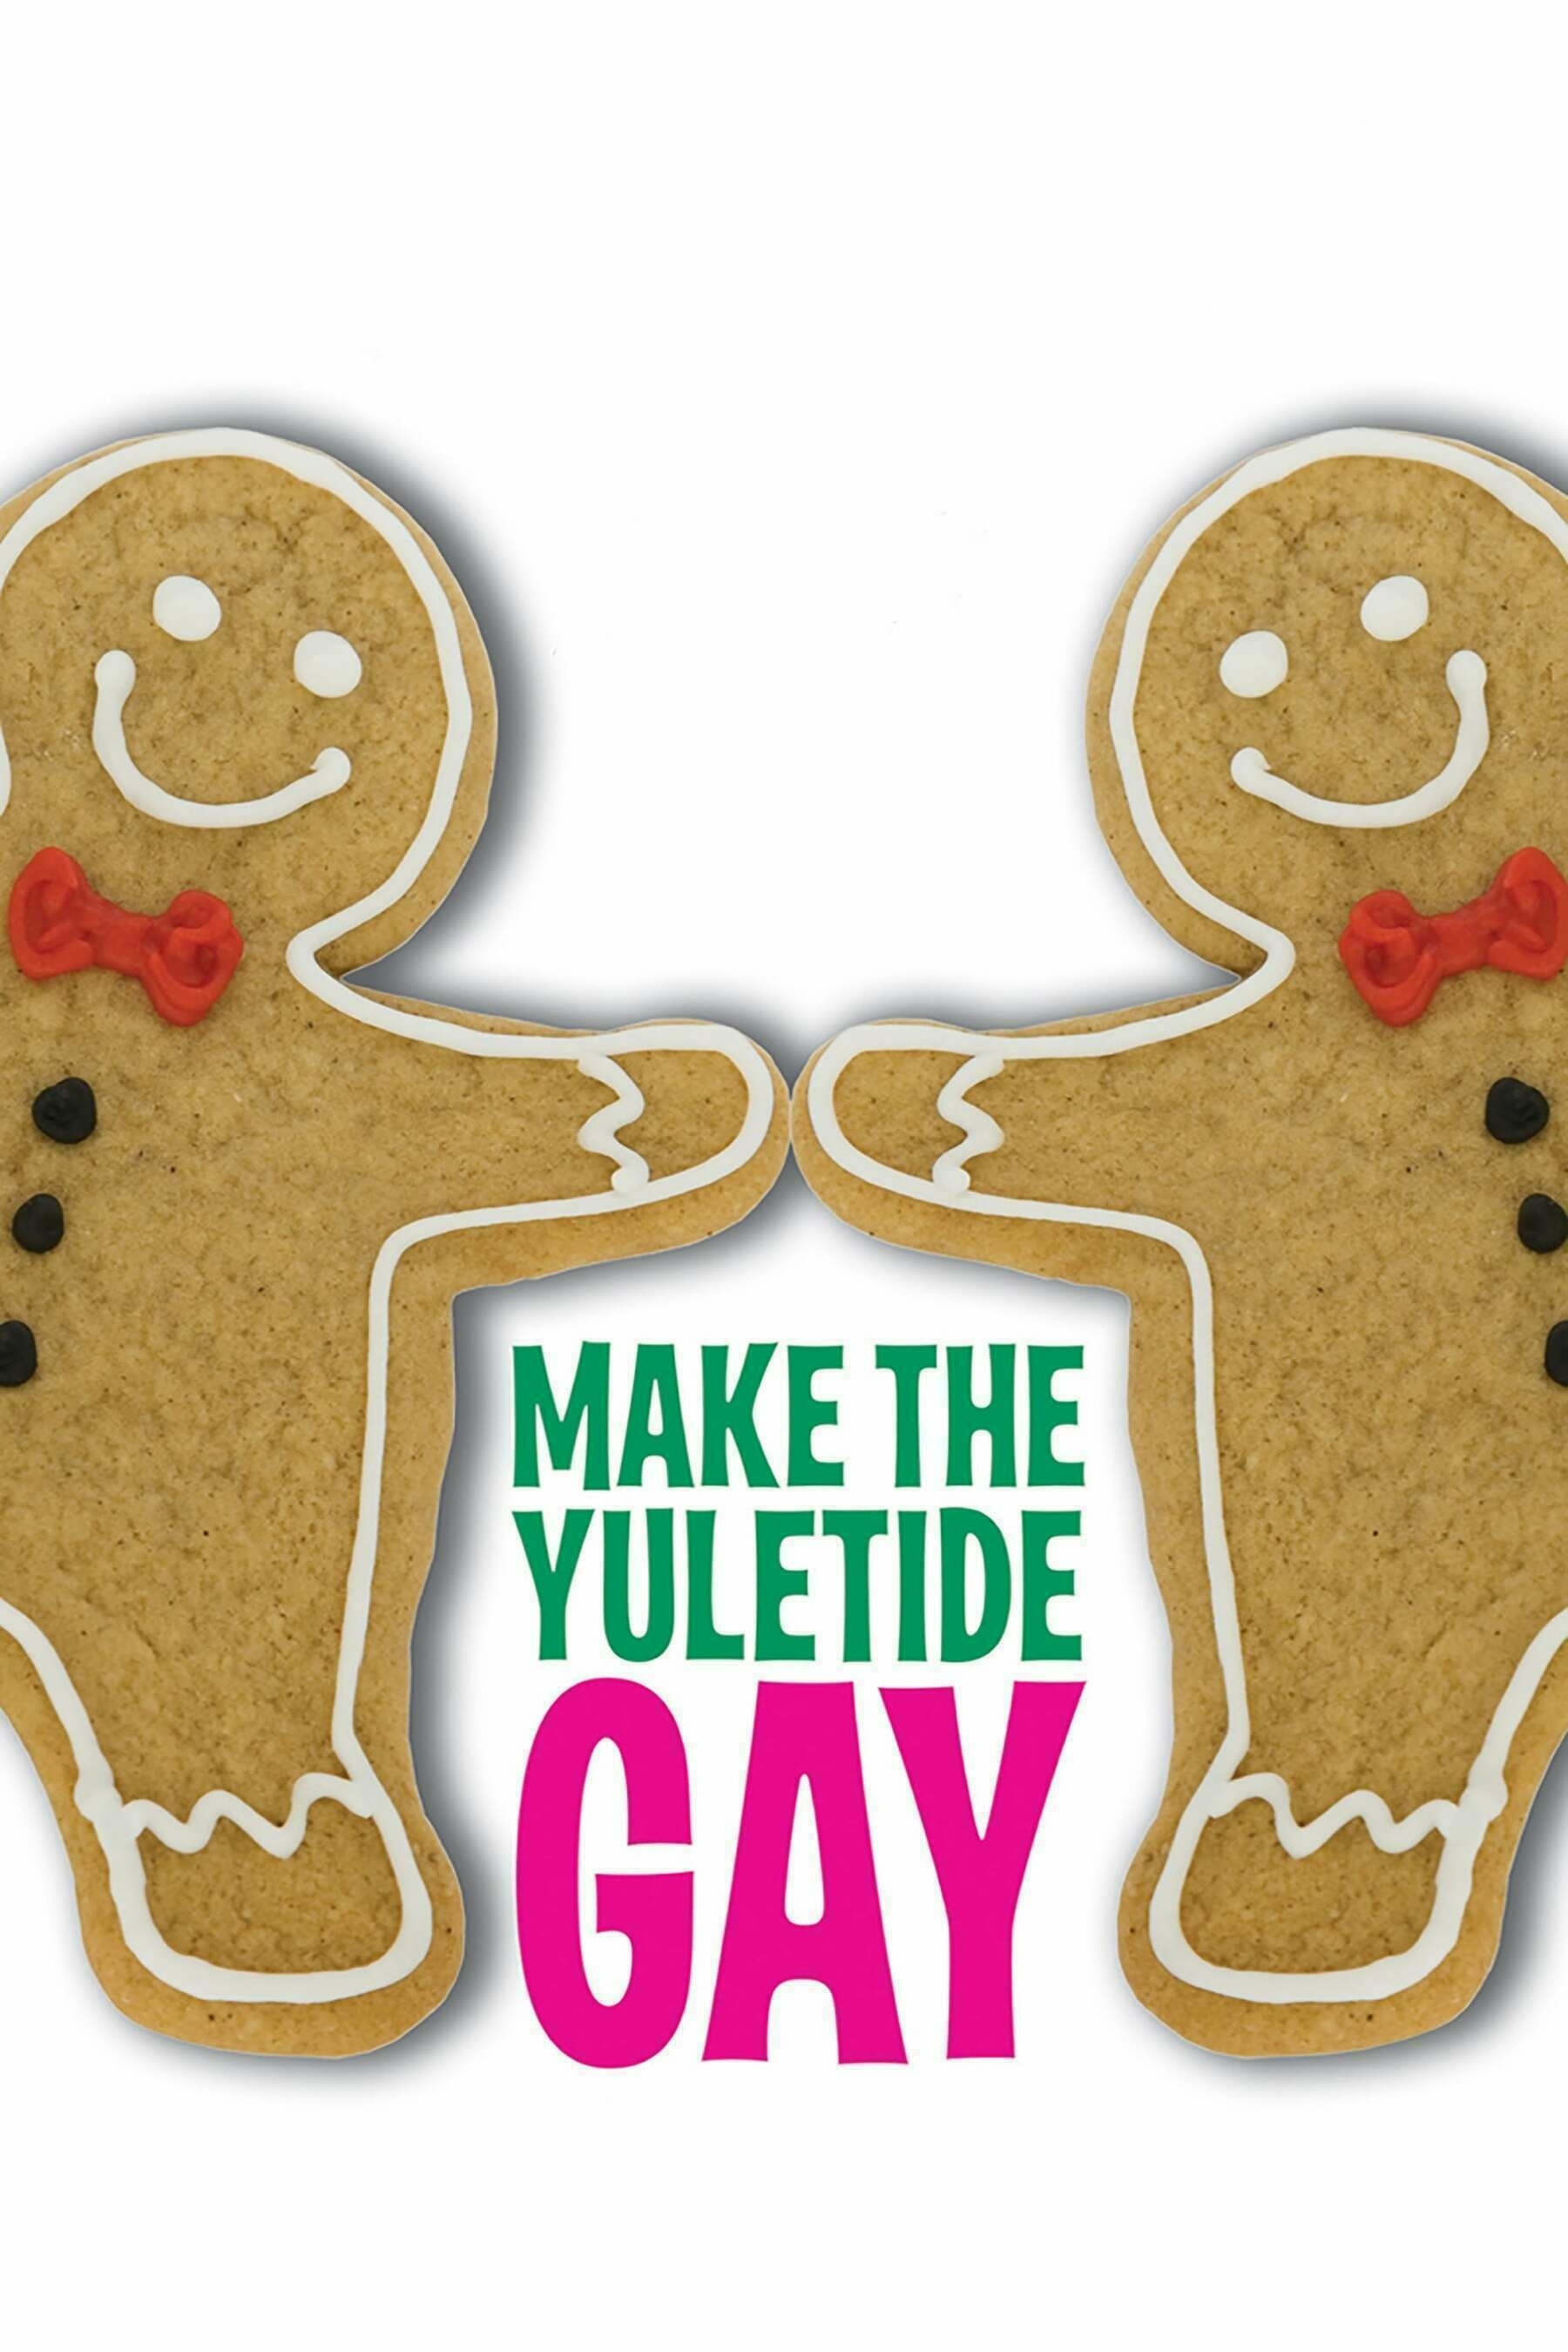 Movie poster: Make the Yuletide Gay (2009).